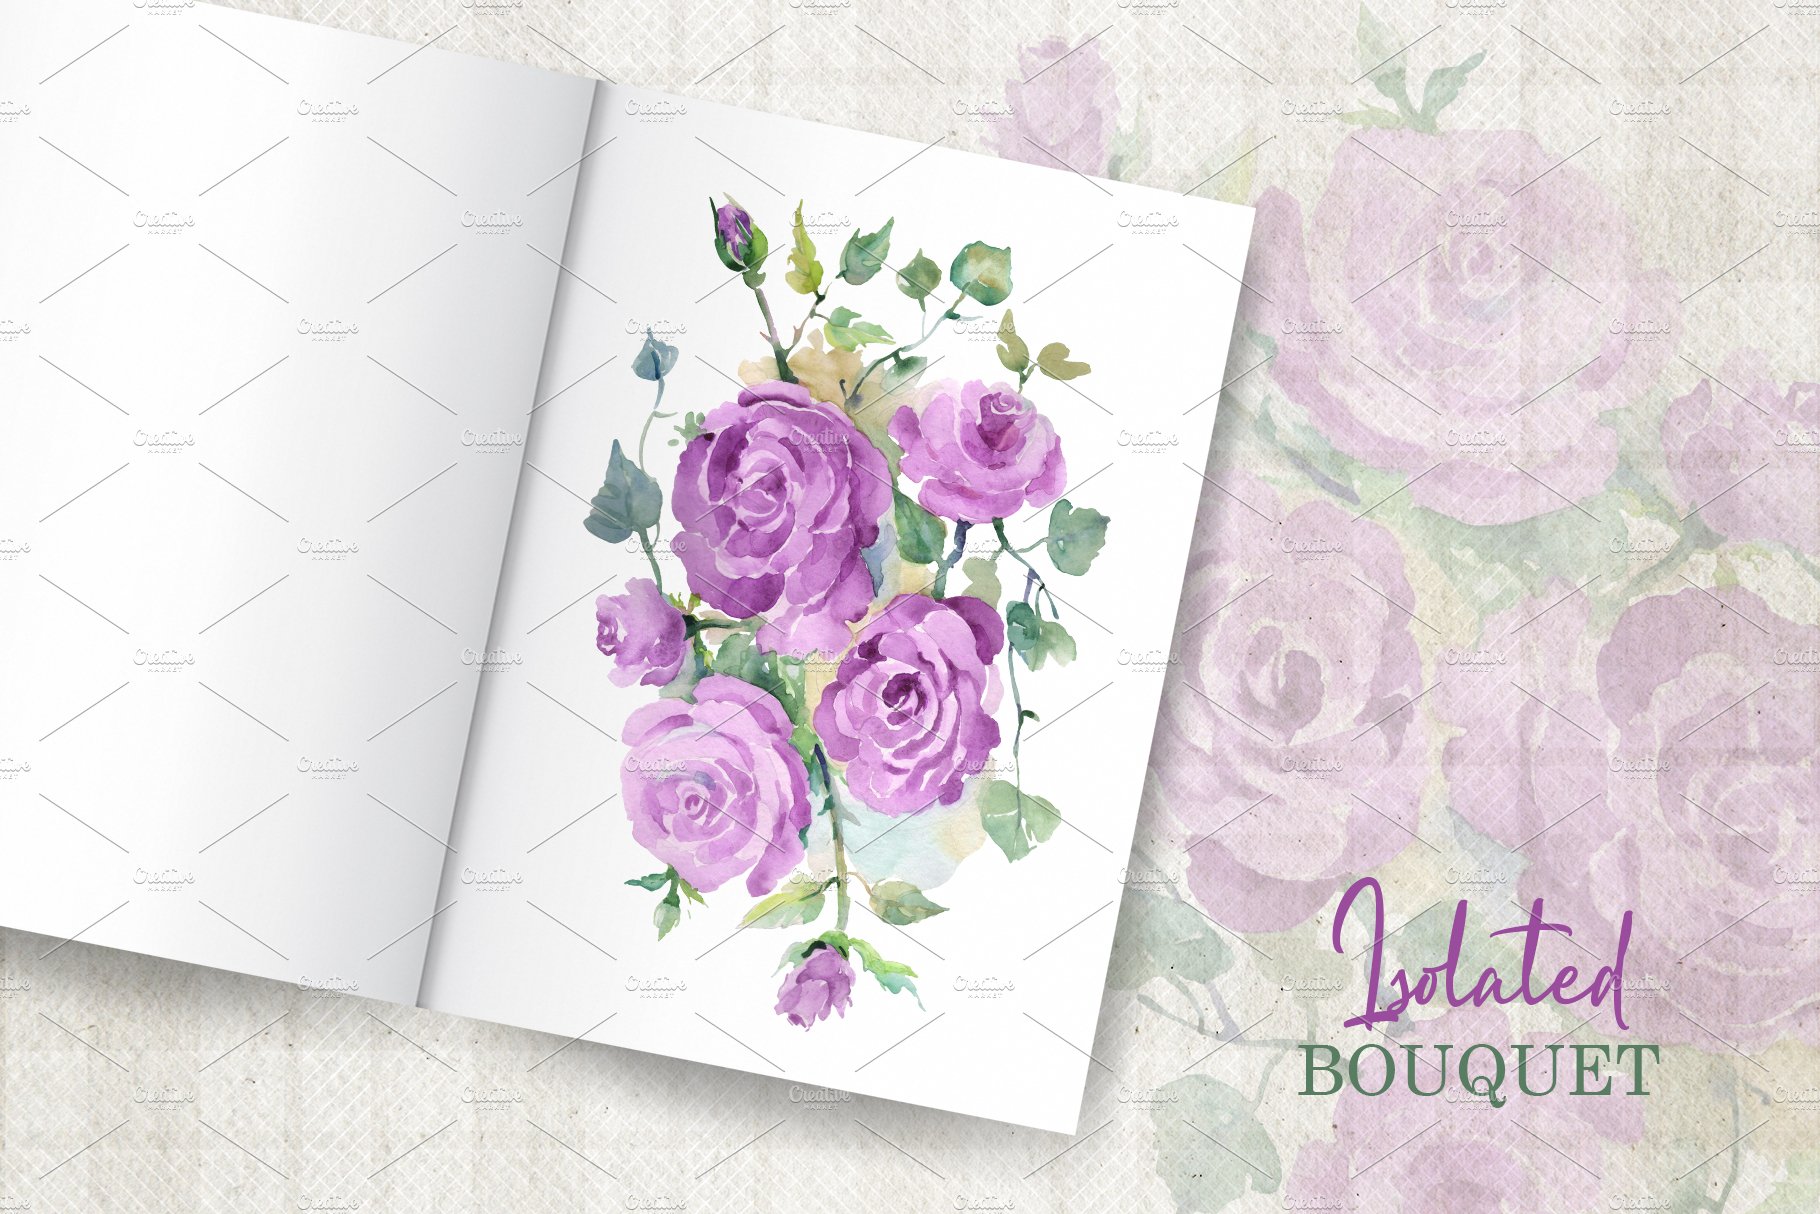 手绘粉红玛瑙玫瑰花花束水彩PNG画集 Bouquet With Watercolor Agate Roses插图2